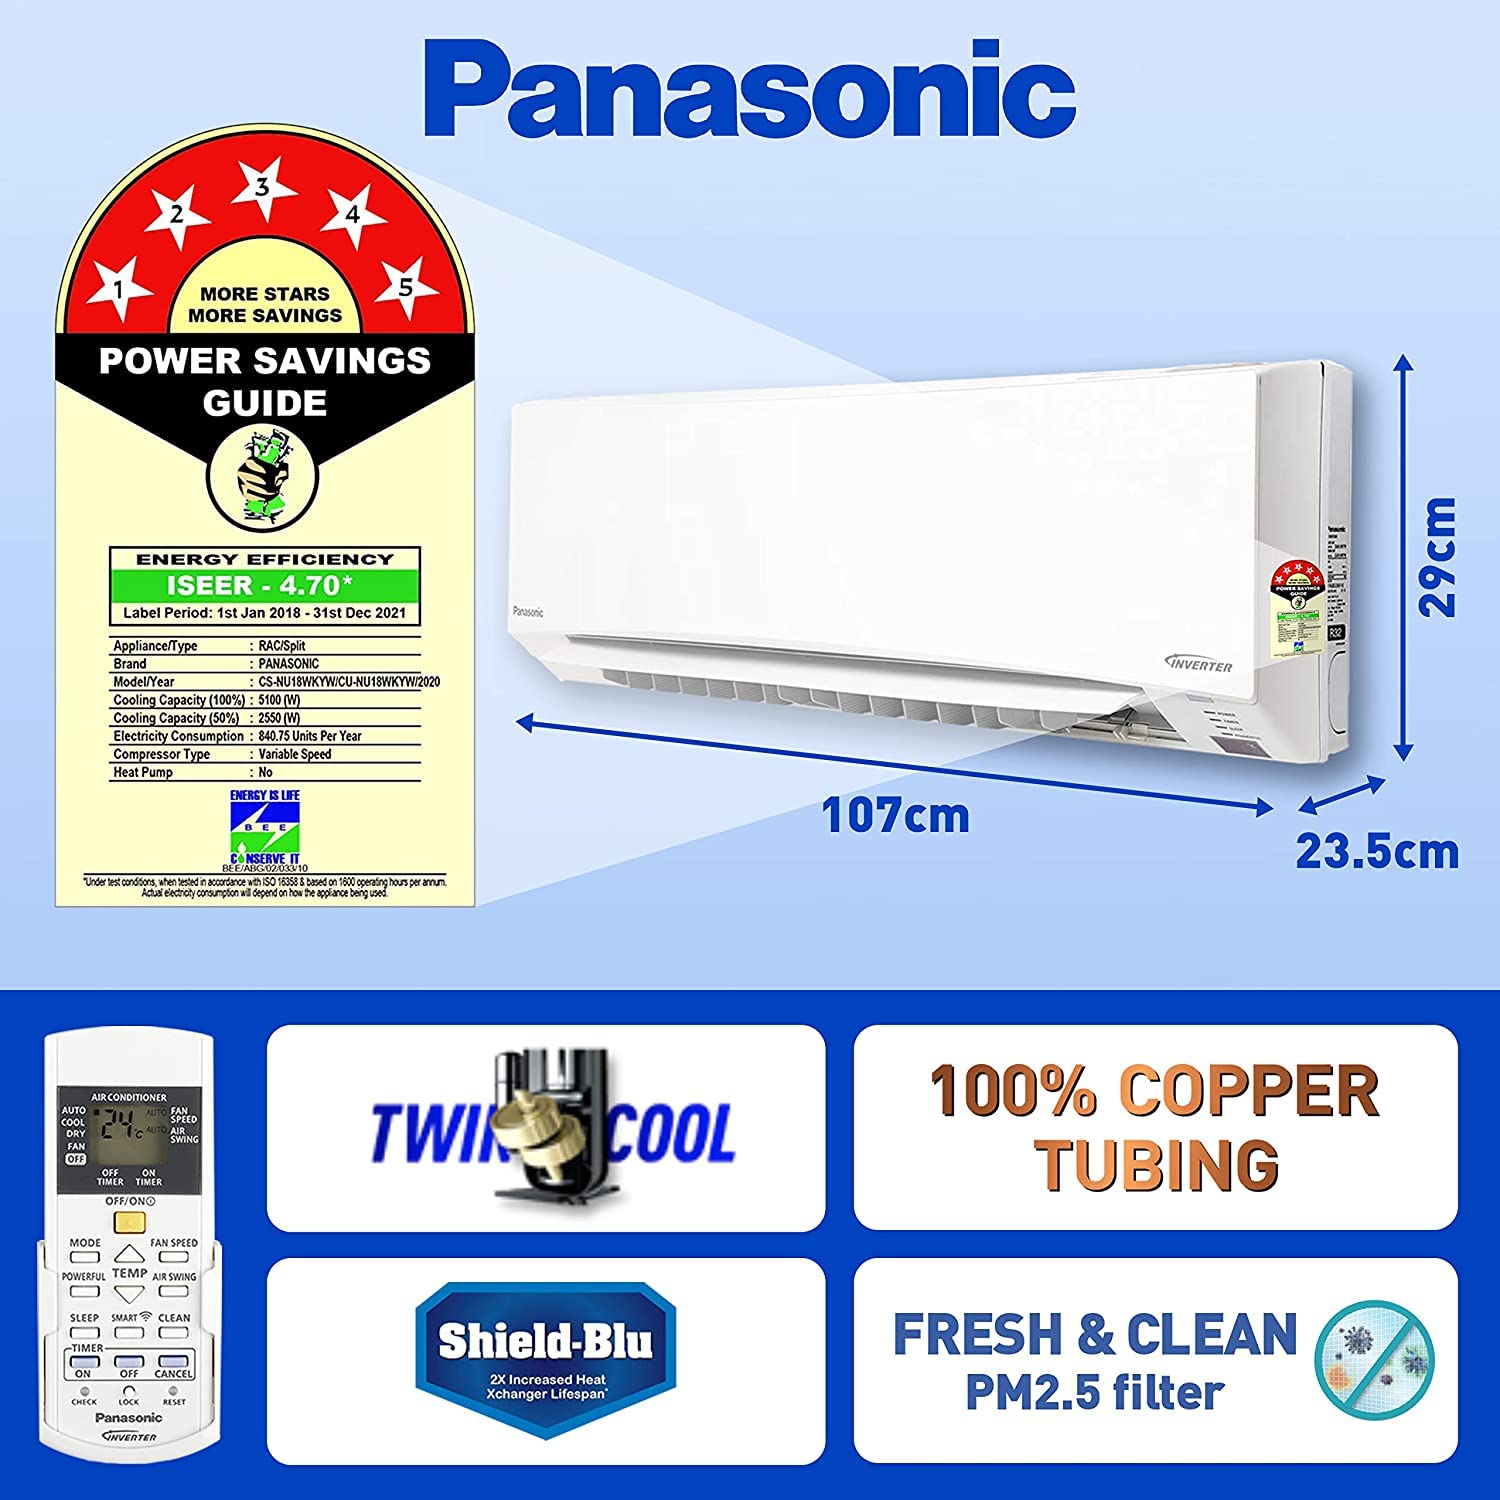 Panasonic 1.5 Ton 5 Star Wi-Fi Twin-Cool Inverter Split Air Conditioner (Copper, Shield Blu Anti-Corrosion Technology, PM 2.5 Air Purification, 2020 Model, CS/CU-NU18WKYW, White)